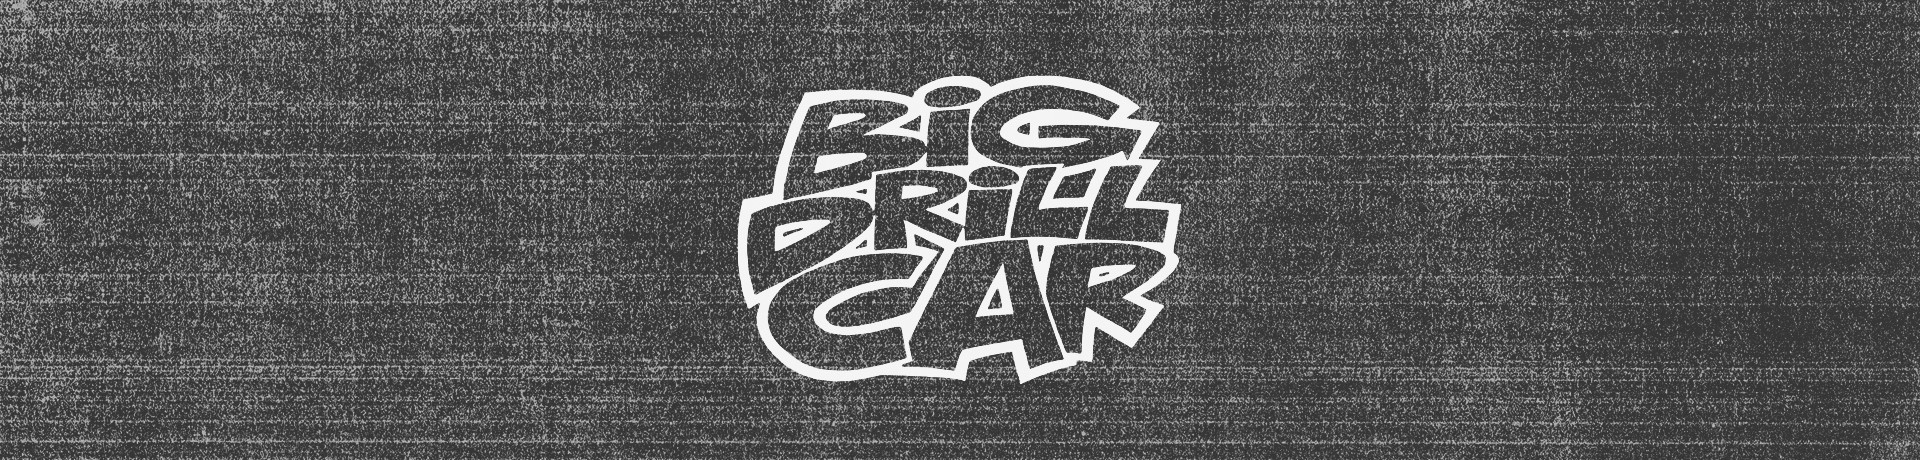 Big Drill Car - Monster